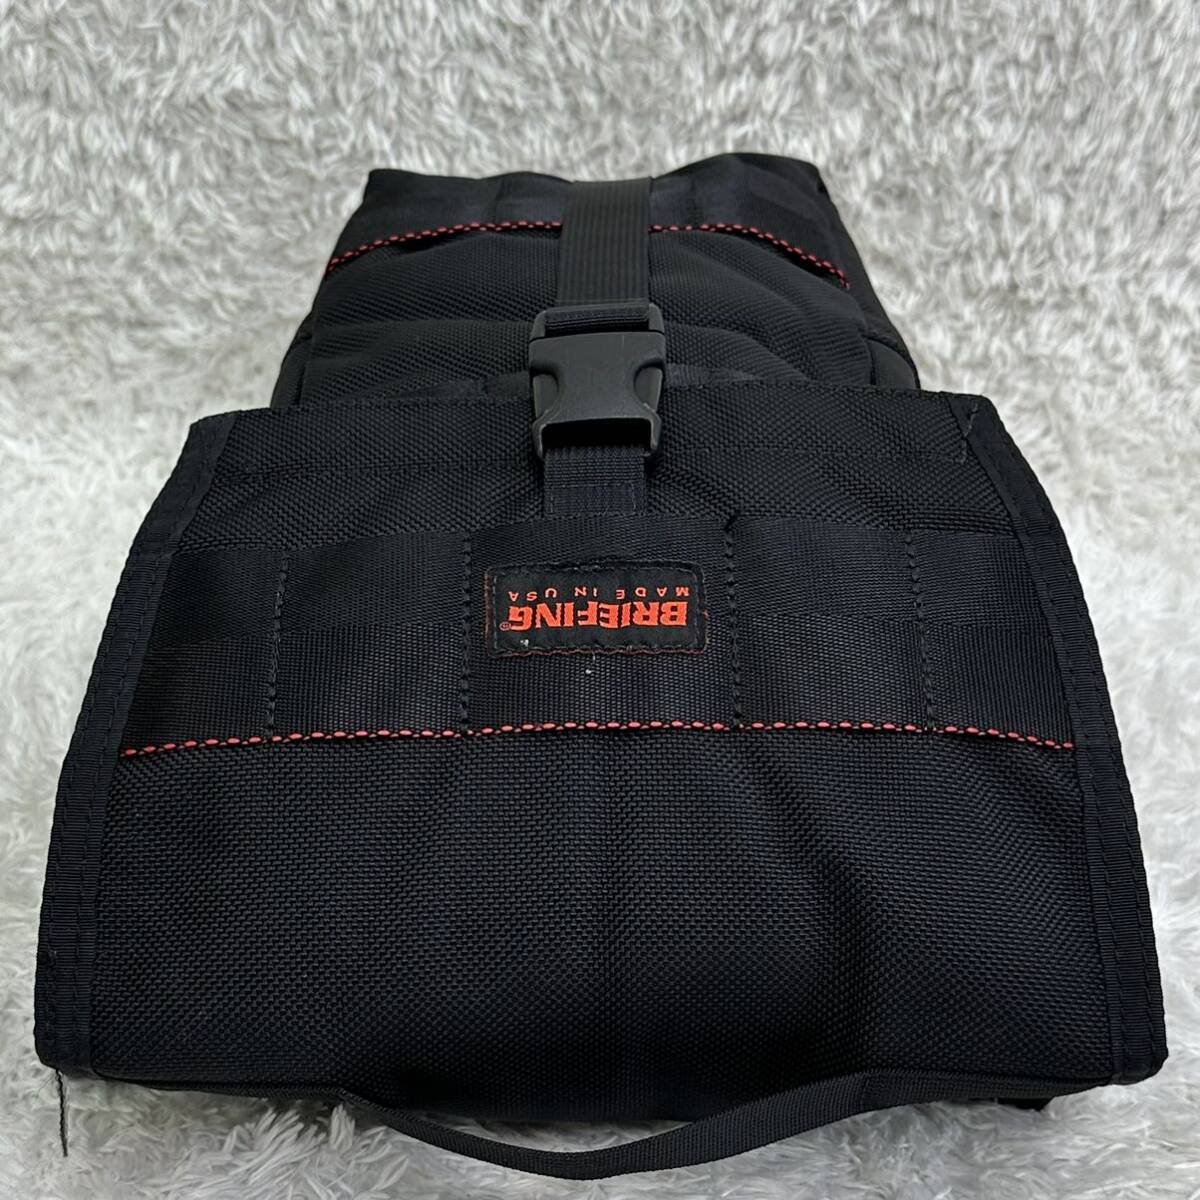 [ rare design 3way]BRIEFING shoulder bag body bag waist bag black black Briefing high capacity shoulder .. Cross body 